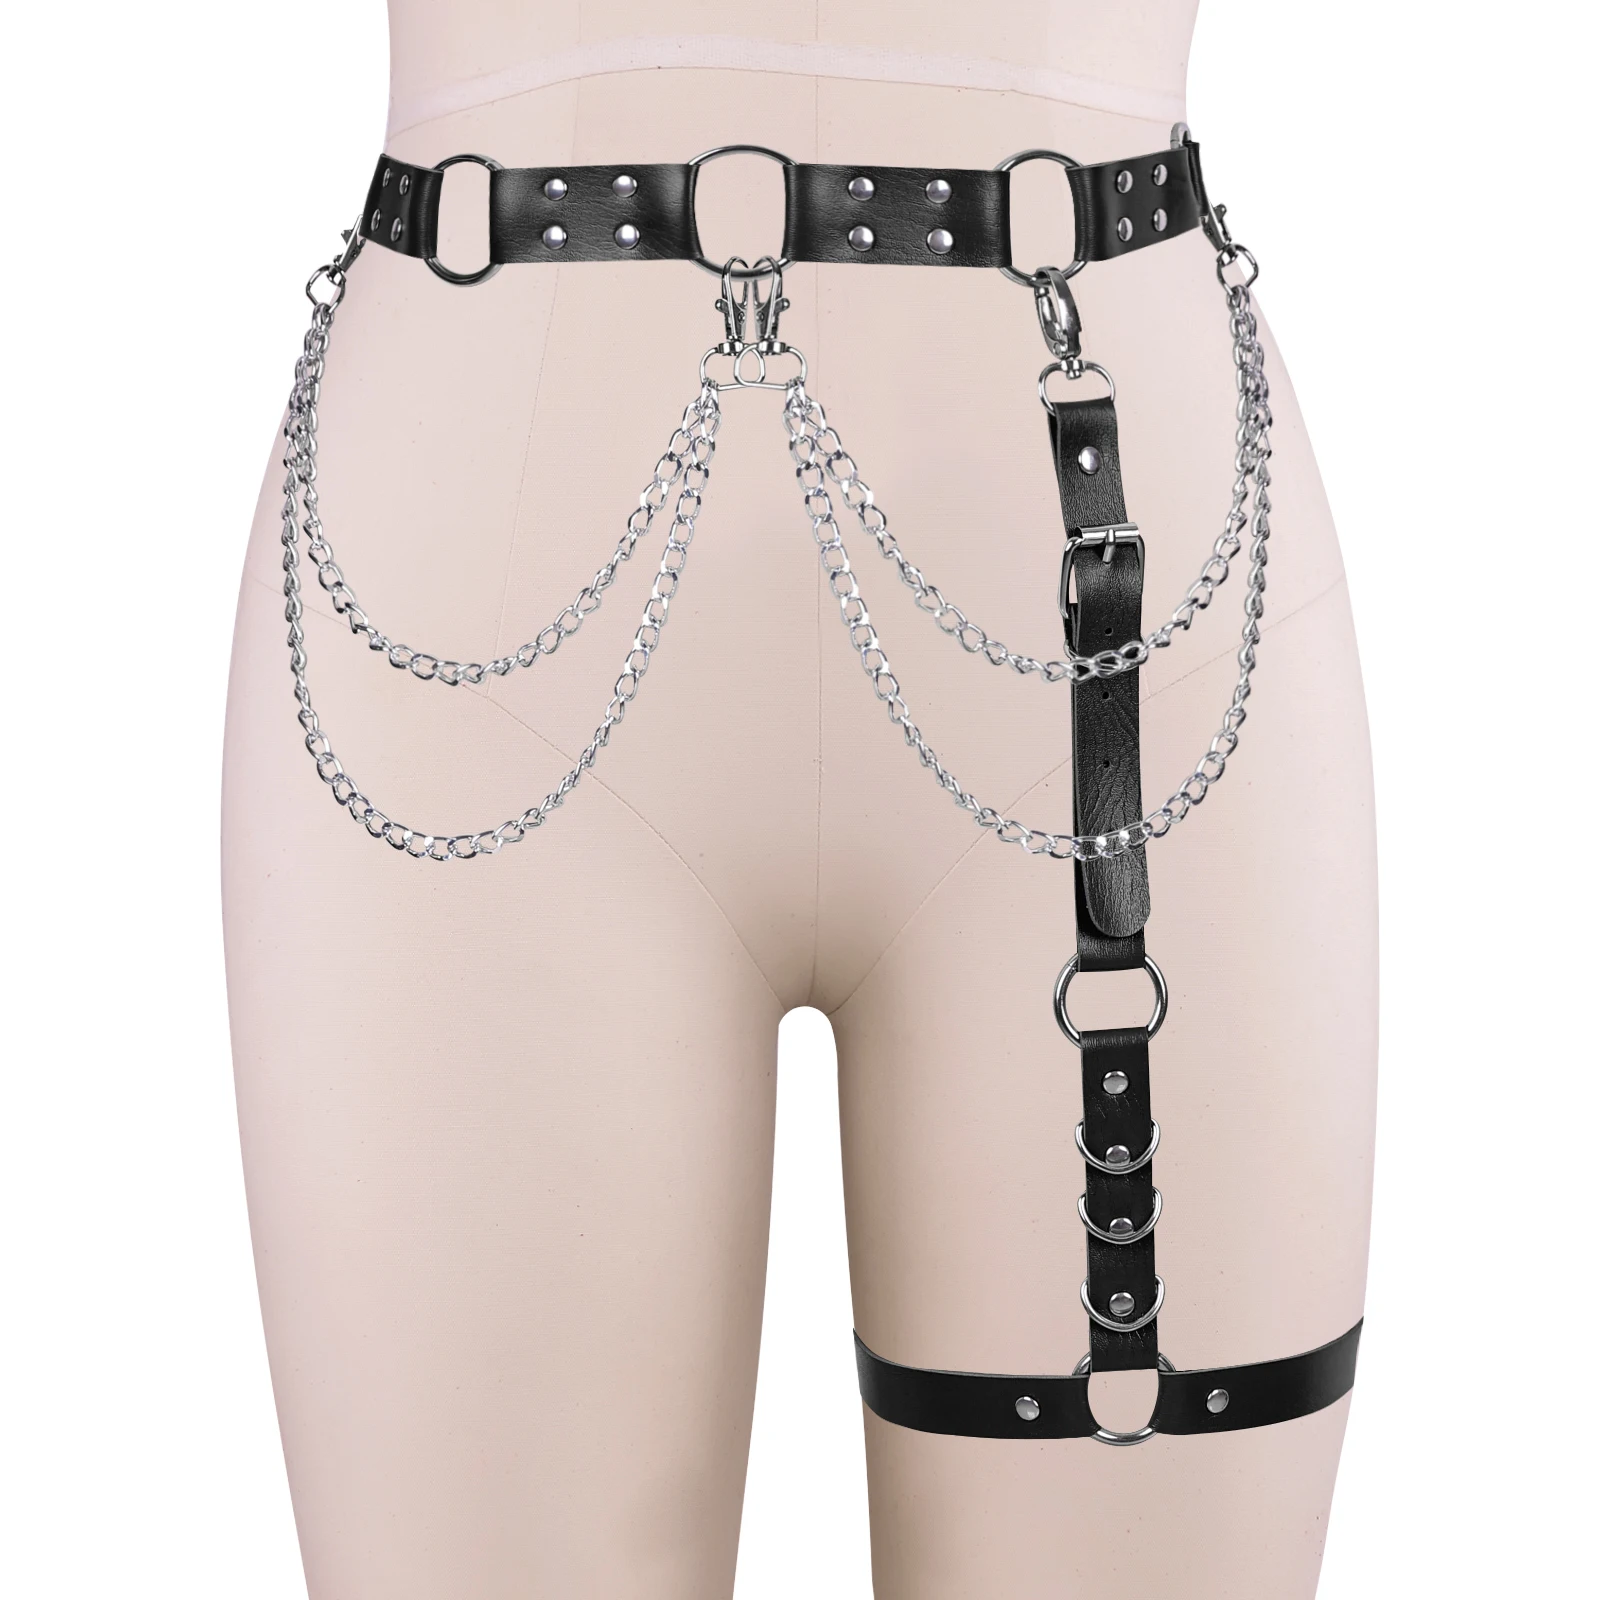 Sword Belt Harness for Women Sexy Punk Leather Harness Garter Belt Gothic Buttocks Bondage Erotic Lingerie Stockings Belt BDSM